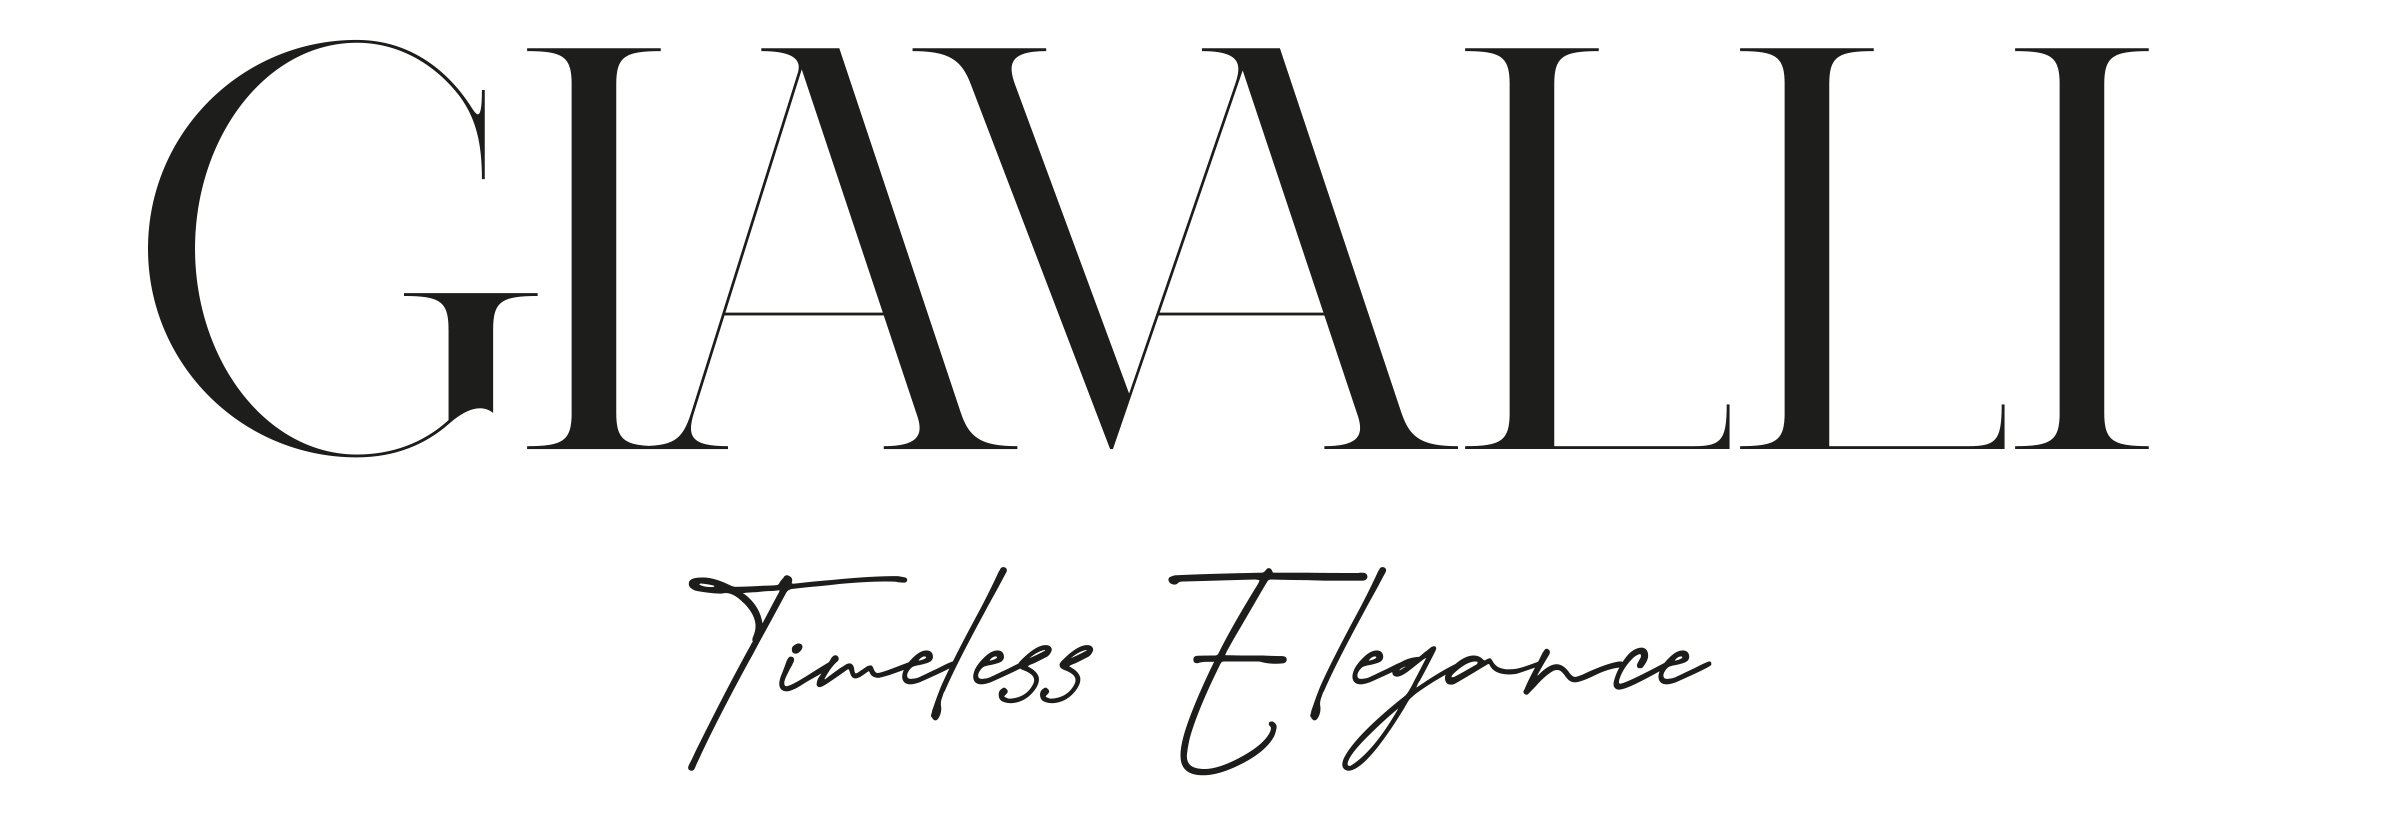 Giavalli Timeless Elegance Logo Black